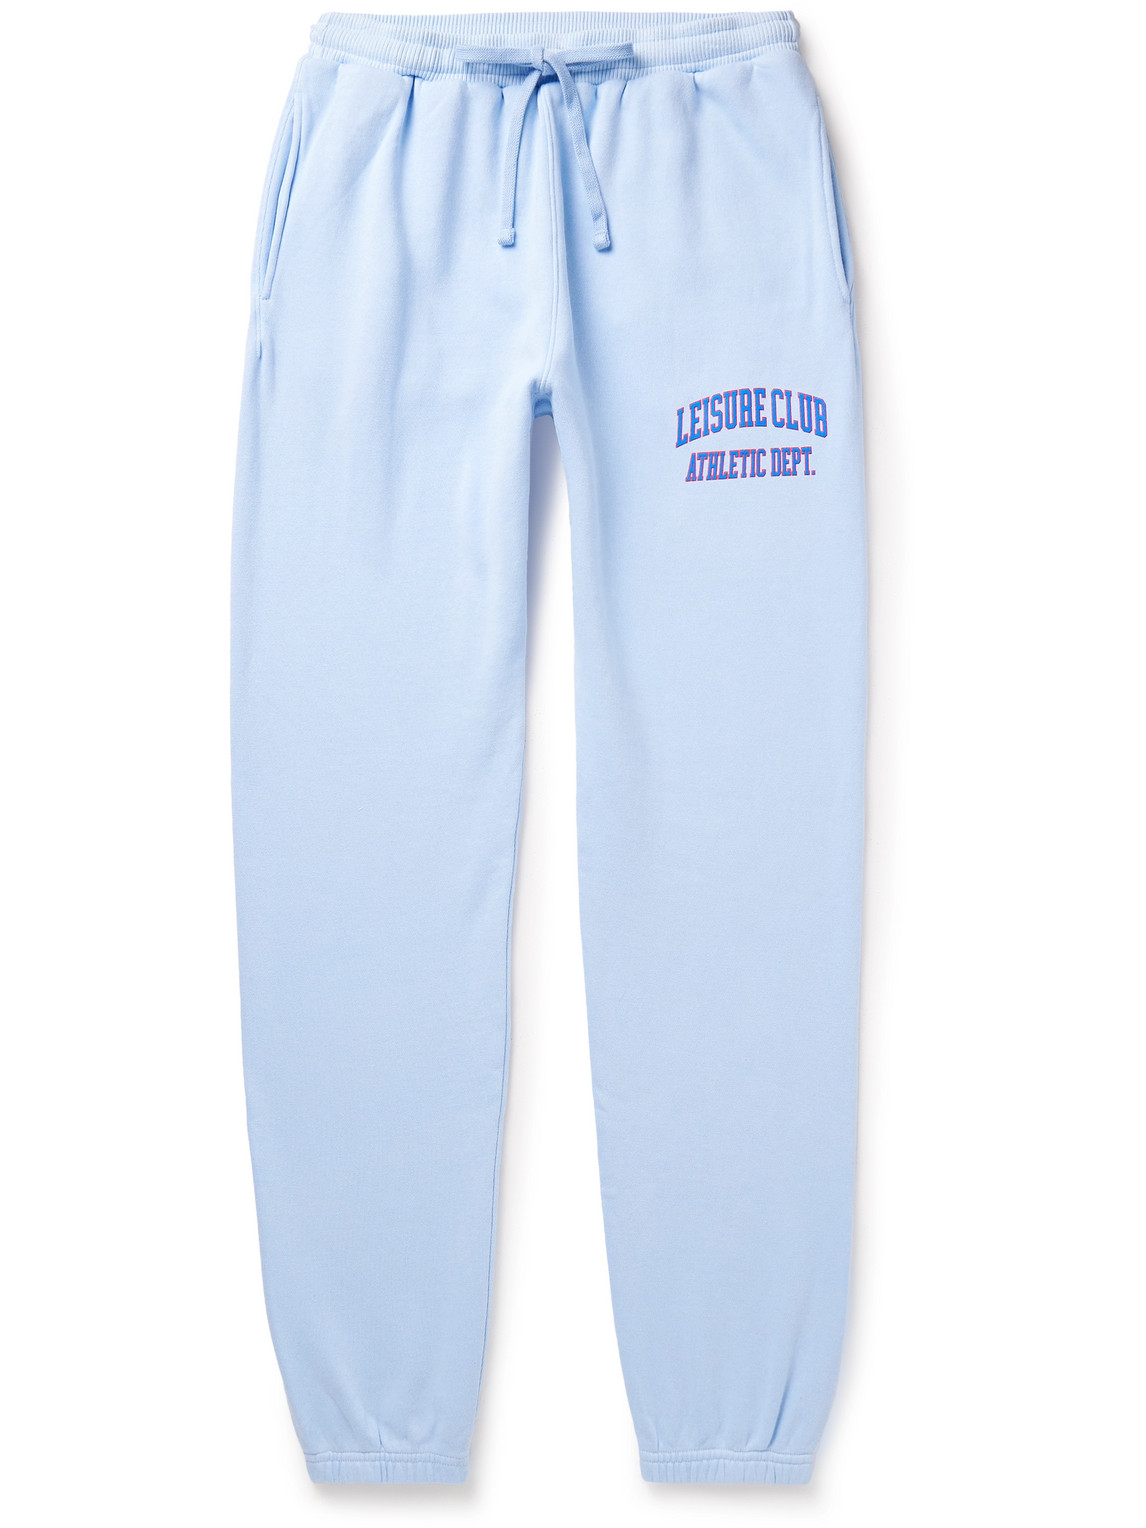 Pasadena Leisure Club - Athletic Dept. Tapered Logo-Print Garment-Dyed Cotton-Jersey Sweatpants - Men - Blue - M von Pasadena Leisure Club